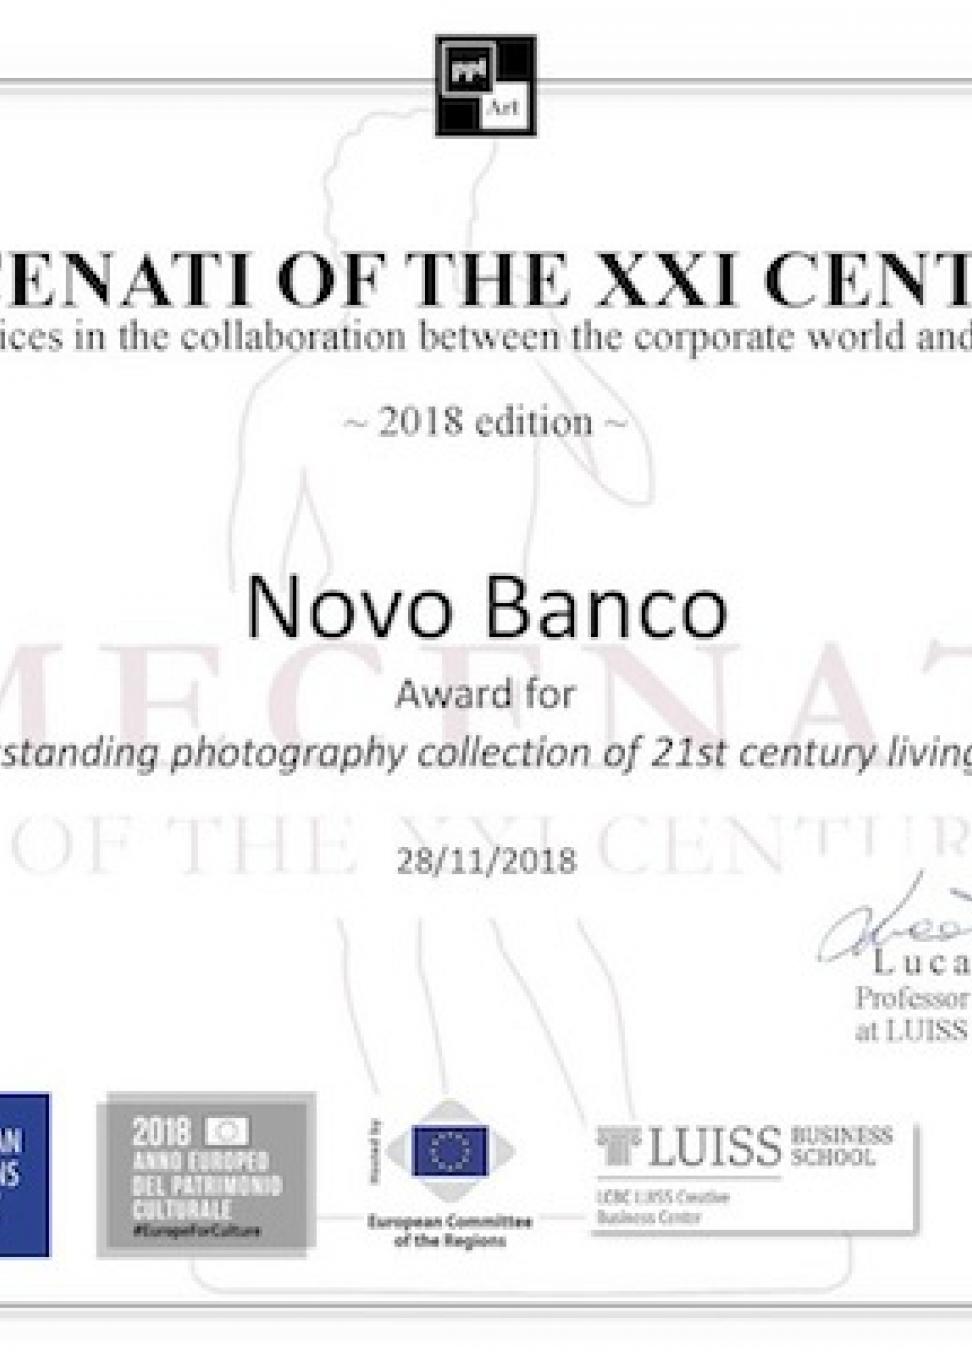 2018 Corporate Art Awards - Mecenati of the XXI Century